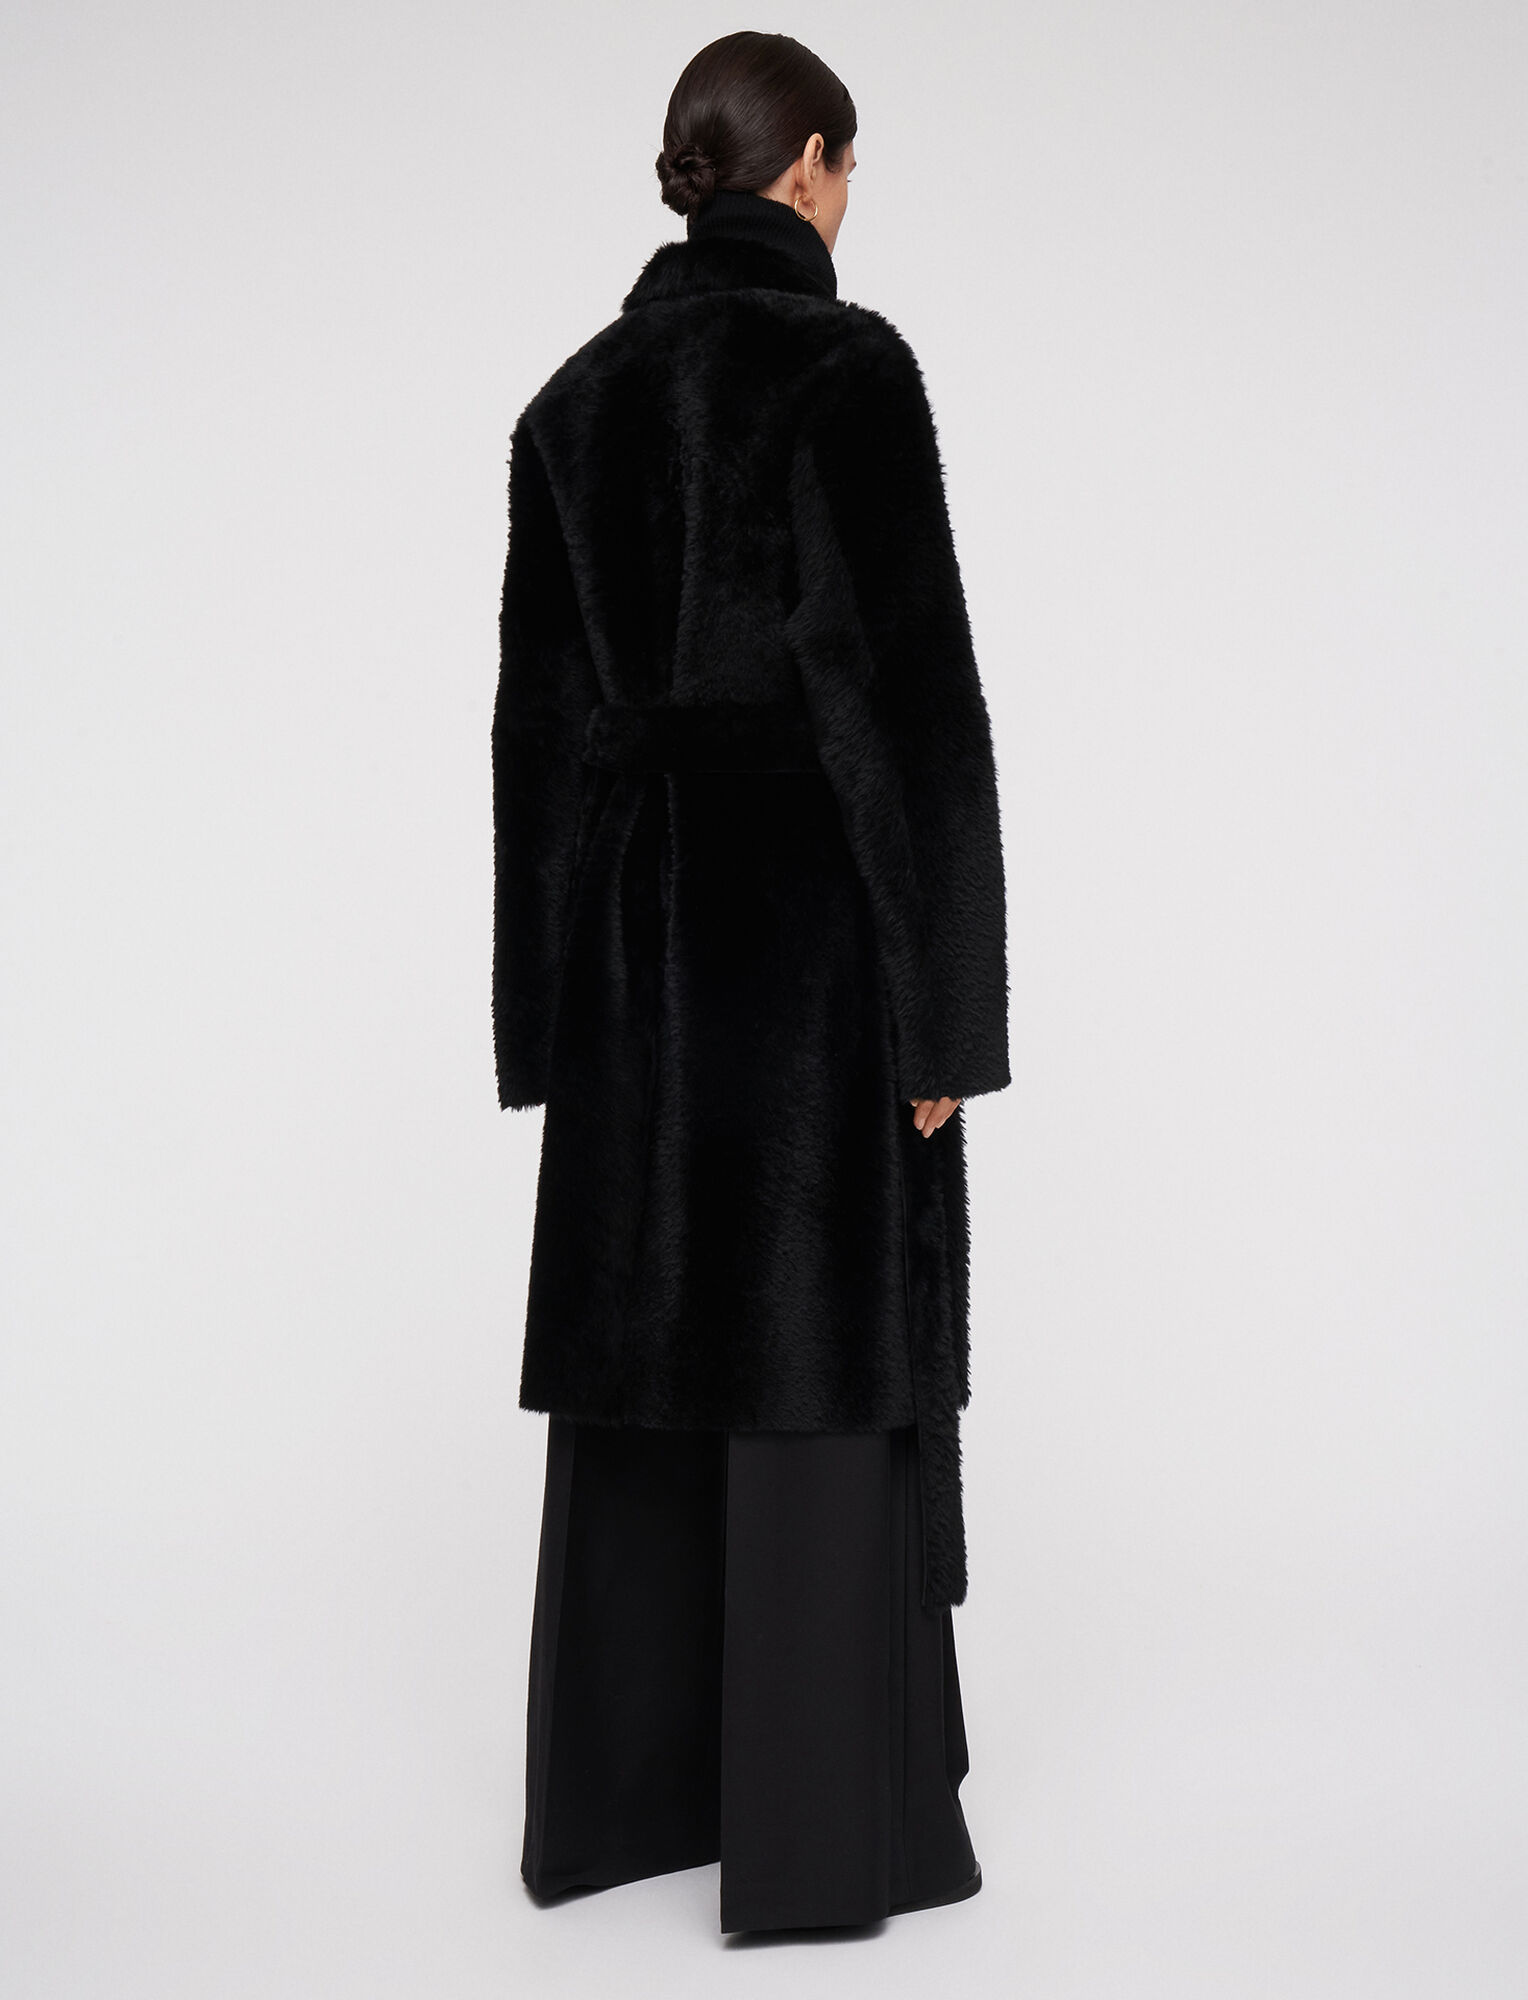 Joseph, Textured Merino Cenda Long Coat, in Black